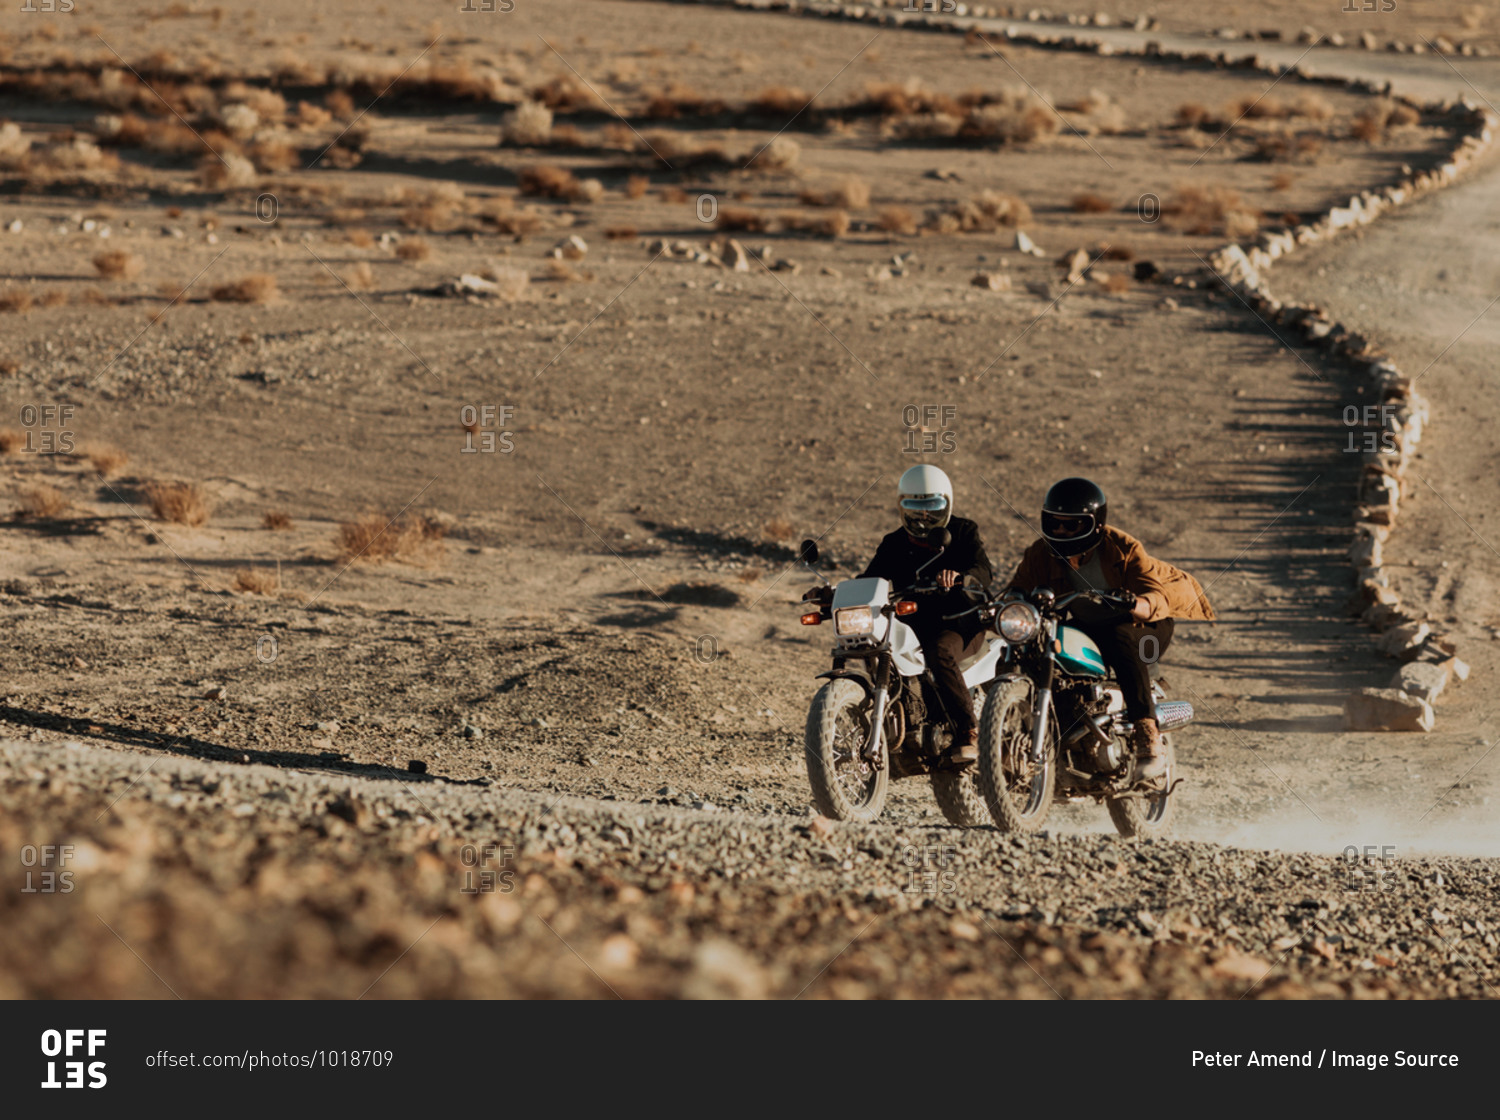 Motorcyclist friends riding in desert, Trona Pinnacles, California, US